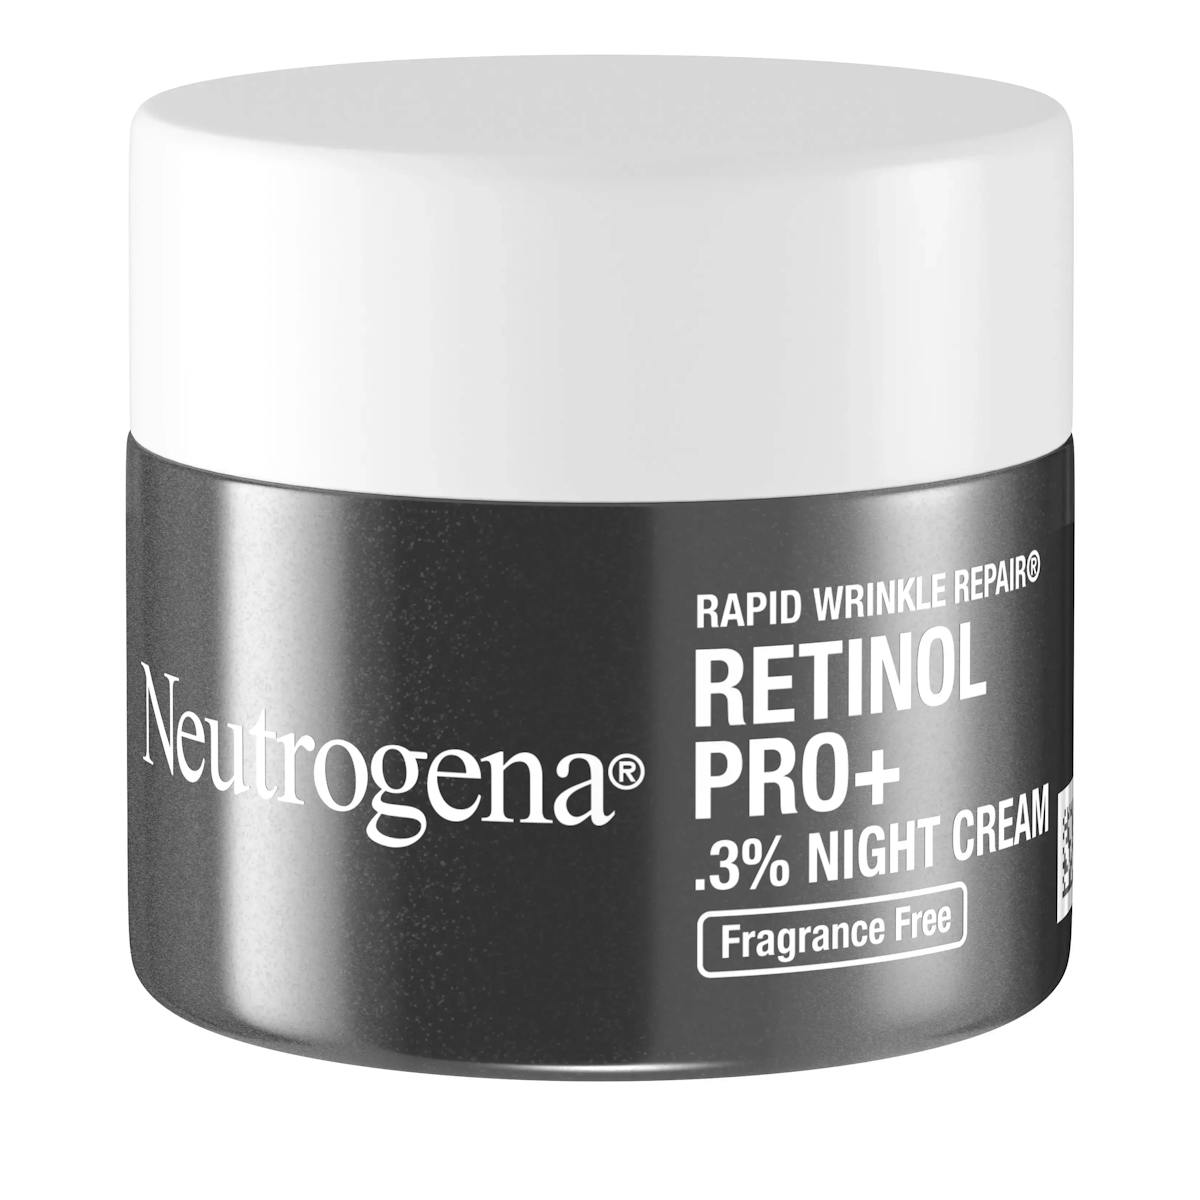 Rapid Wrinkle Repair Retinol Pro+ Night Cream | NEUTROGENA®